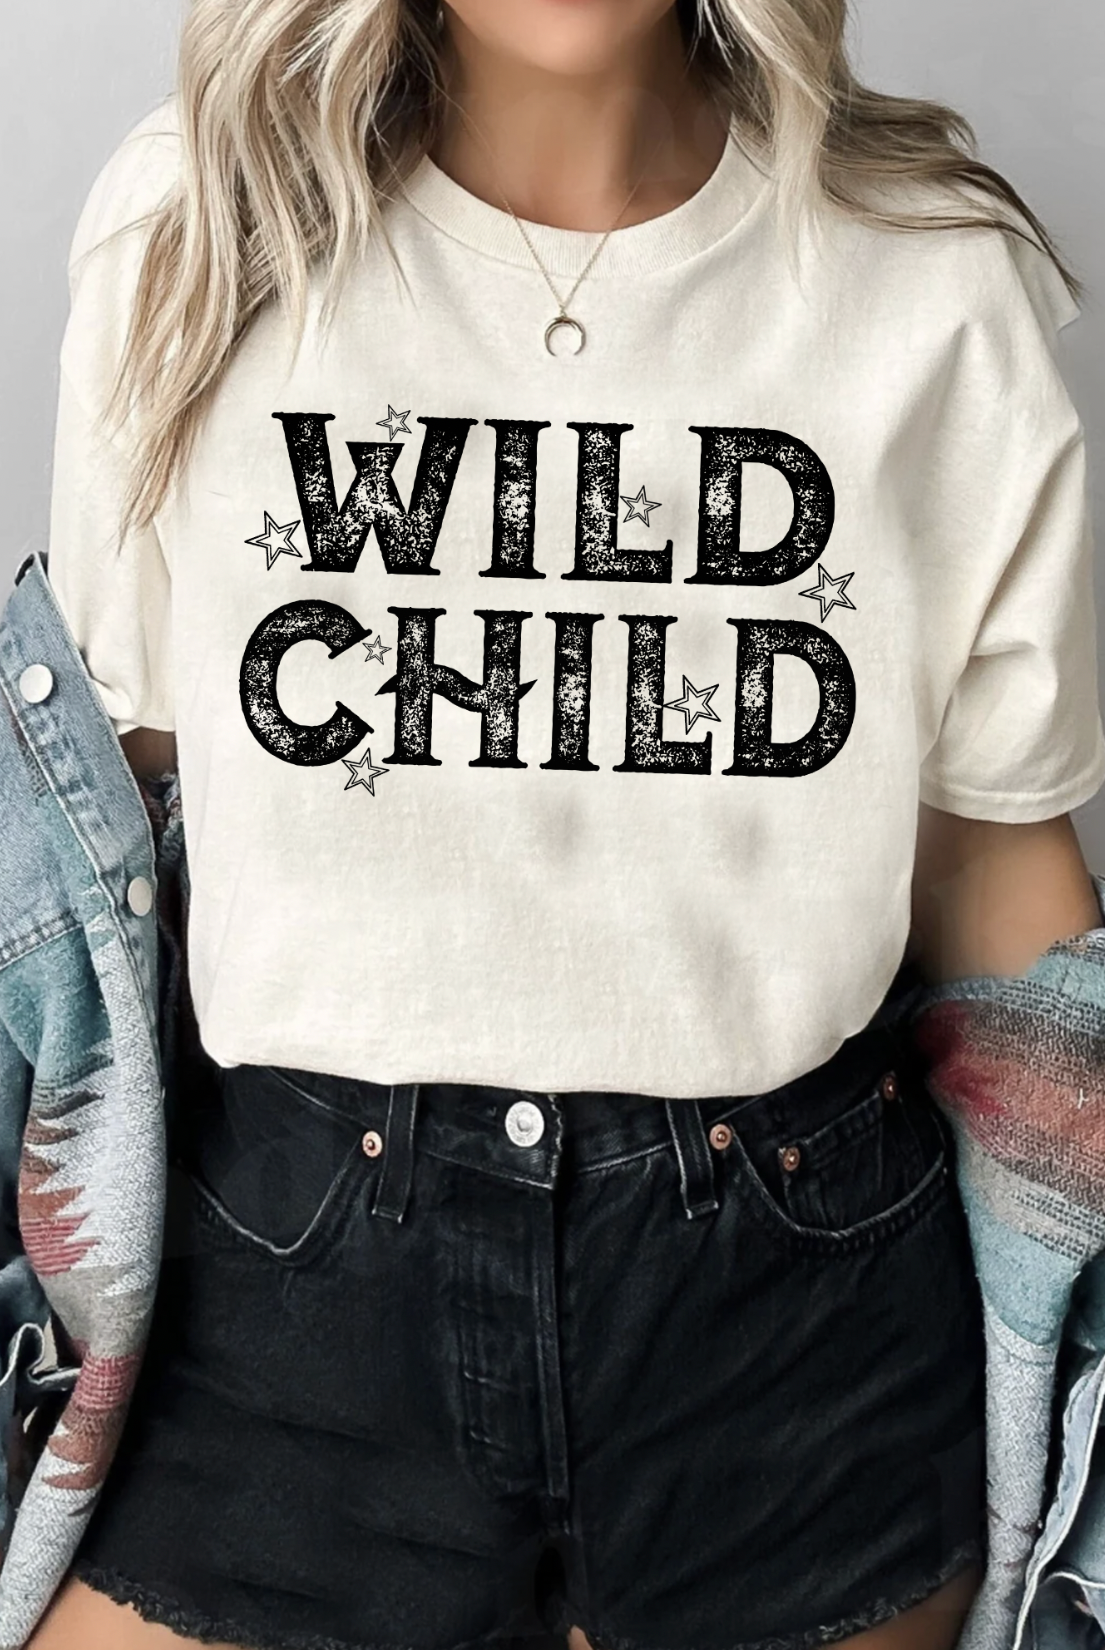 Wild Child Vintage Country Western Unisex Tshirt on Bella and Canvas Shirt in Cream.